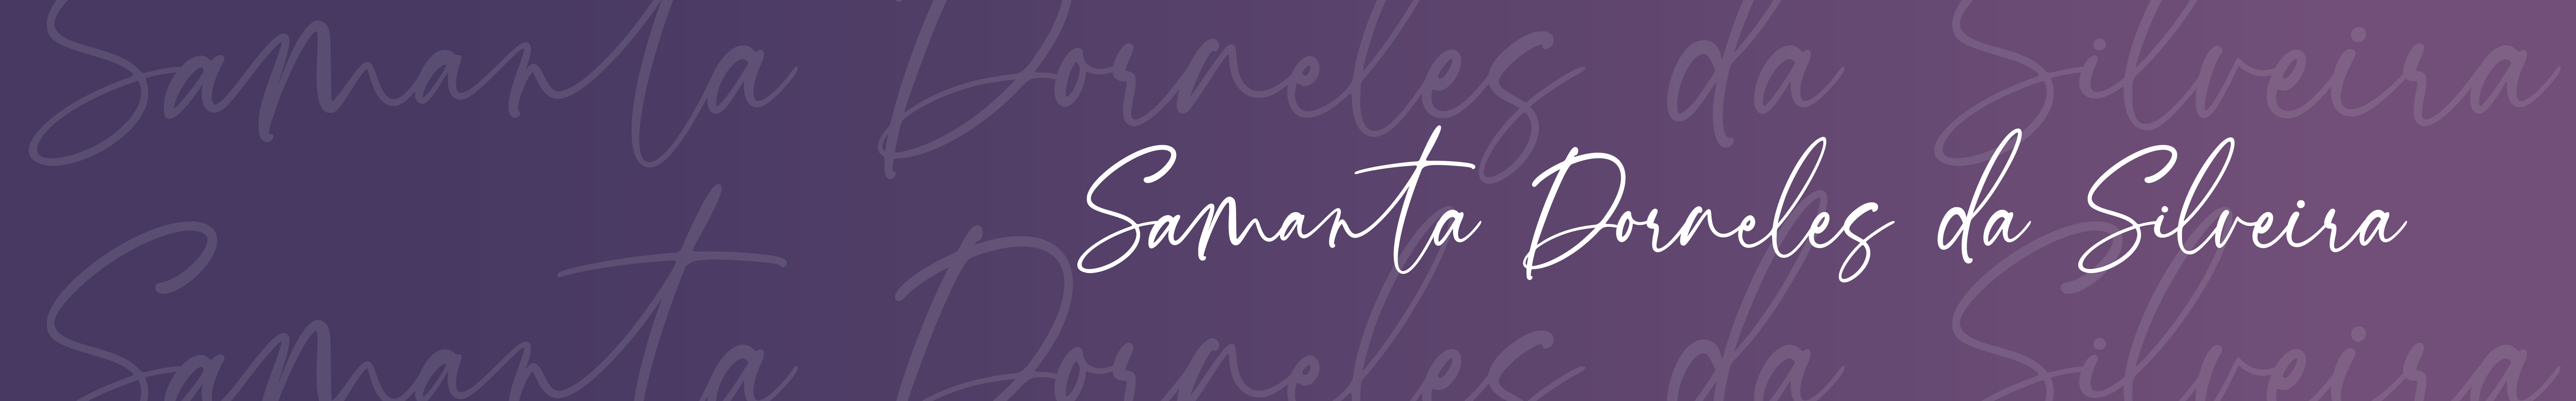 Sammy D.S's profile banner